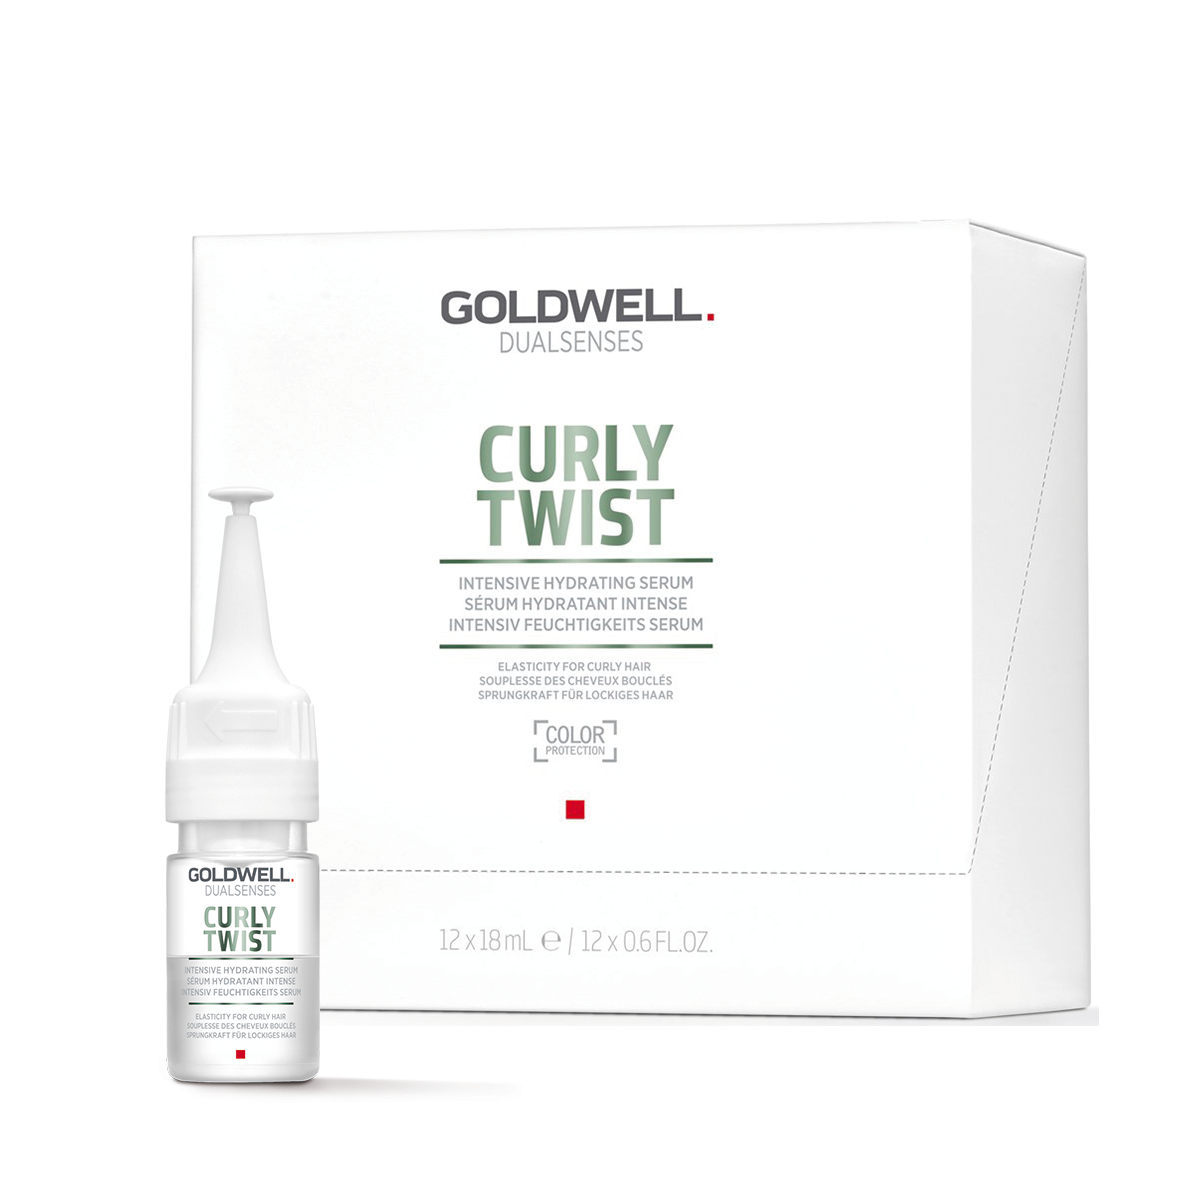 Bilde av Goldwell Curly Twist Dualsenses Intensive Hydrating Serum 12x18ml